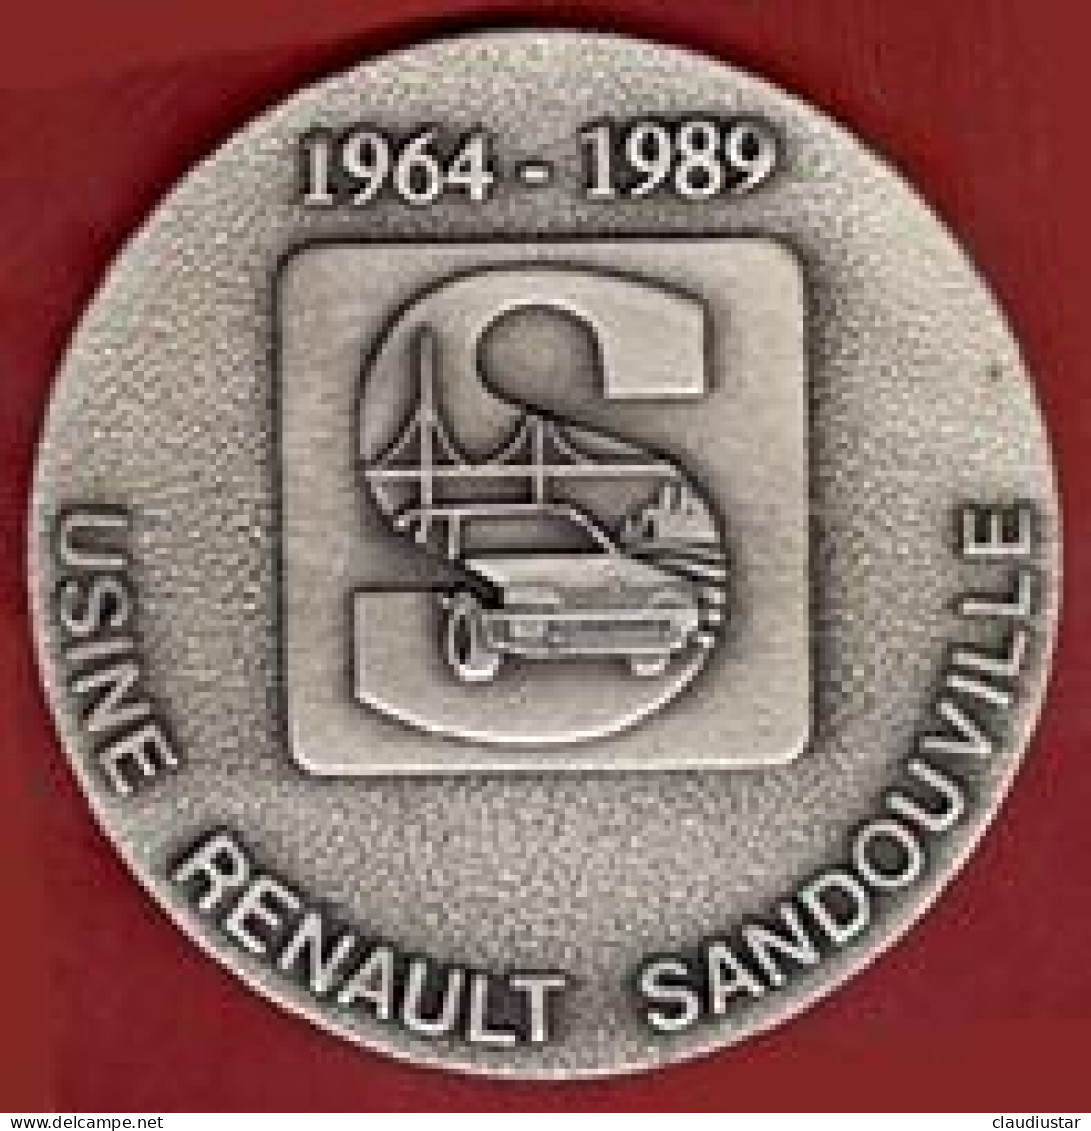 ** MEDAILLE  USINE  RENAULT  SANDOUVILLE  1964 - 1989 ** - Car Racing - F1